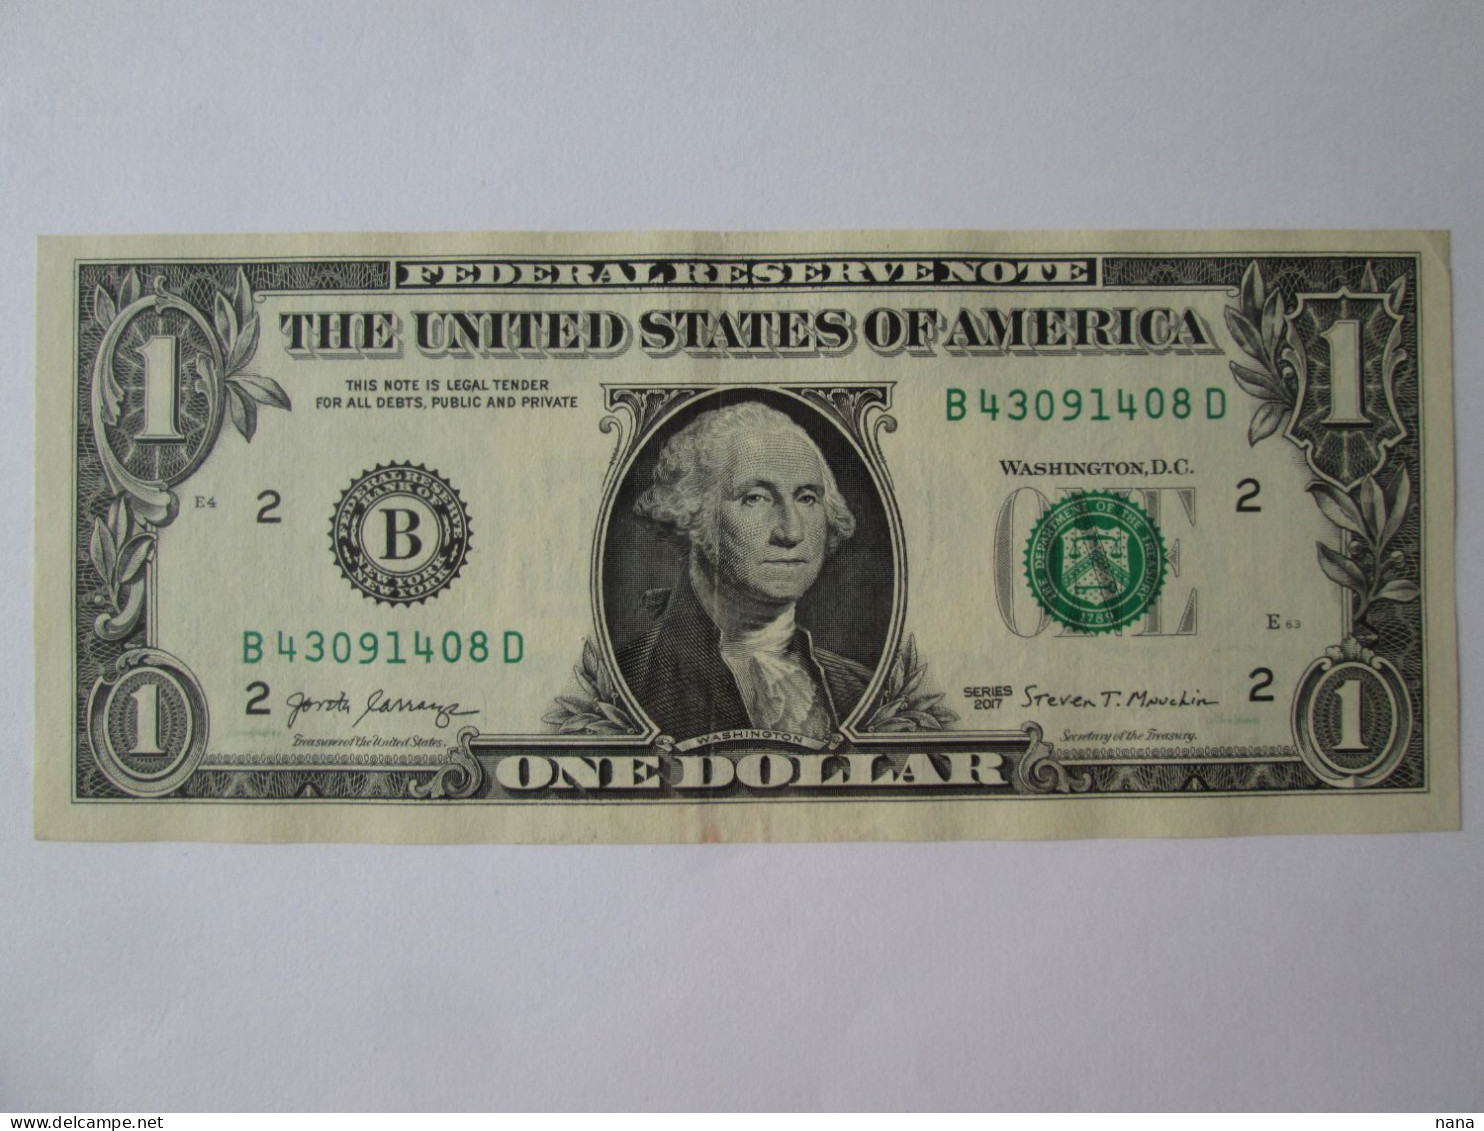 USA 1 Dollar 2017 Banknote See Pictures - Divisa Nacional